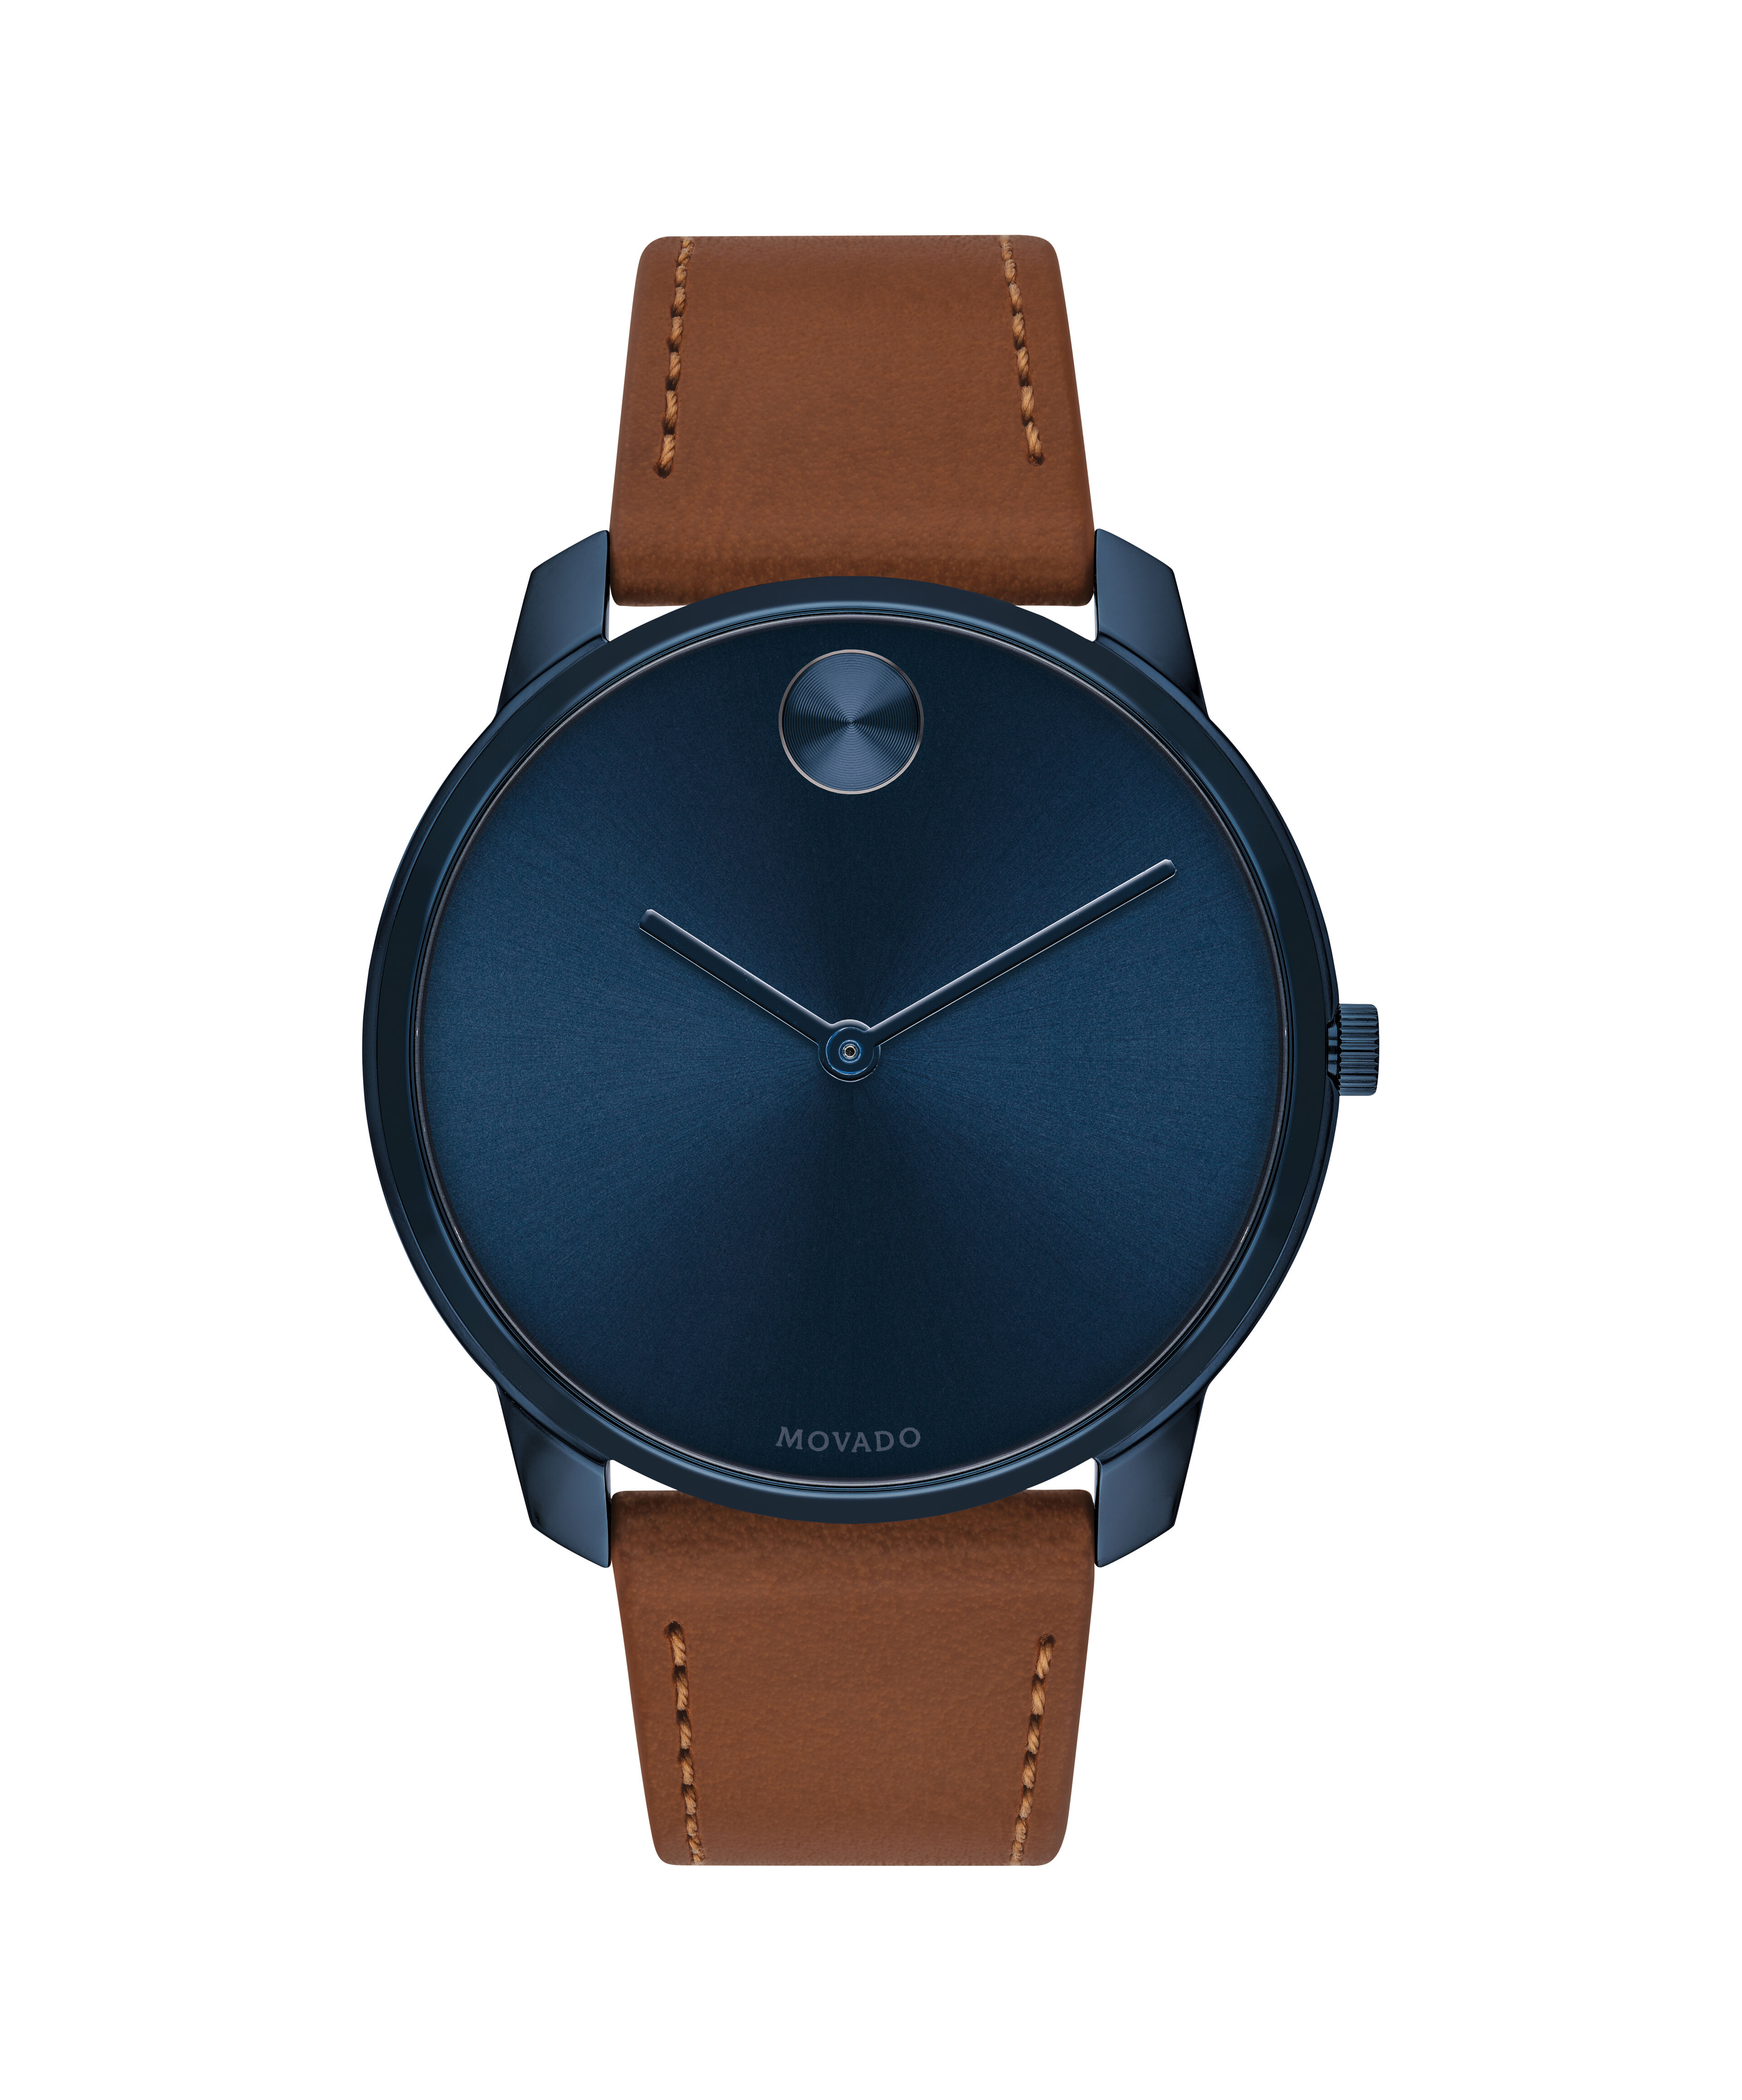 Buy Breitling Navitimer 125th Anniversary Replica Watch